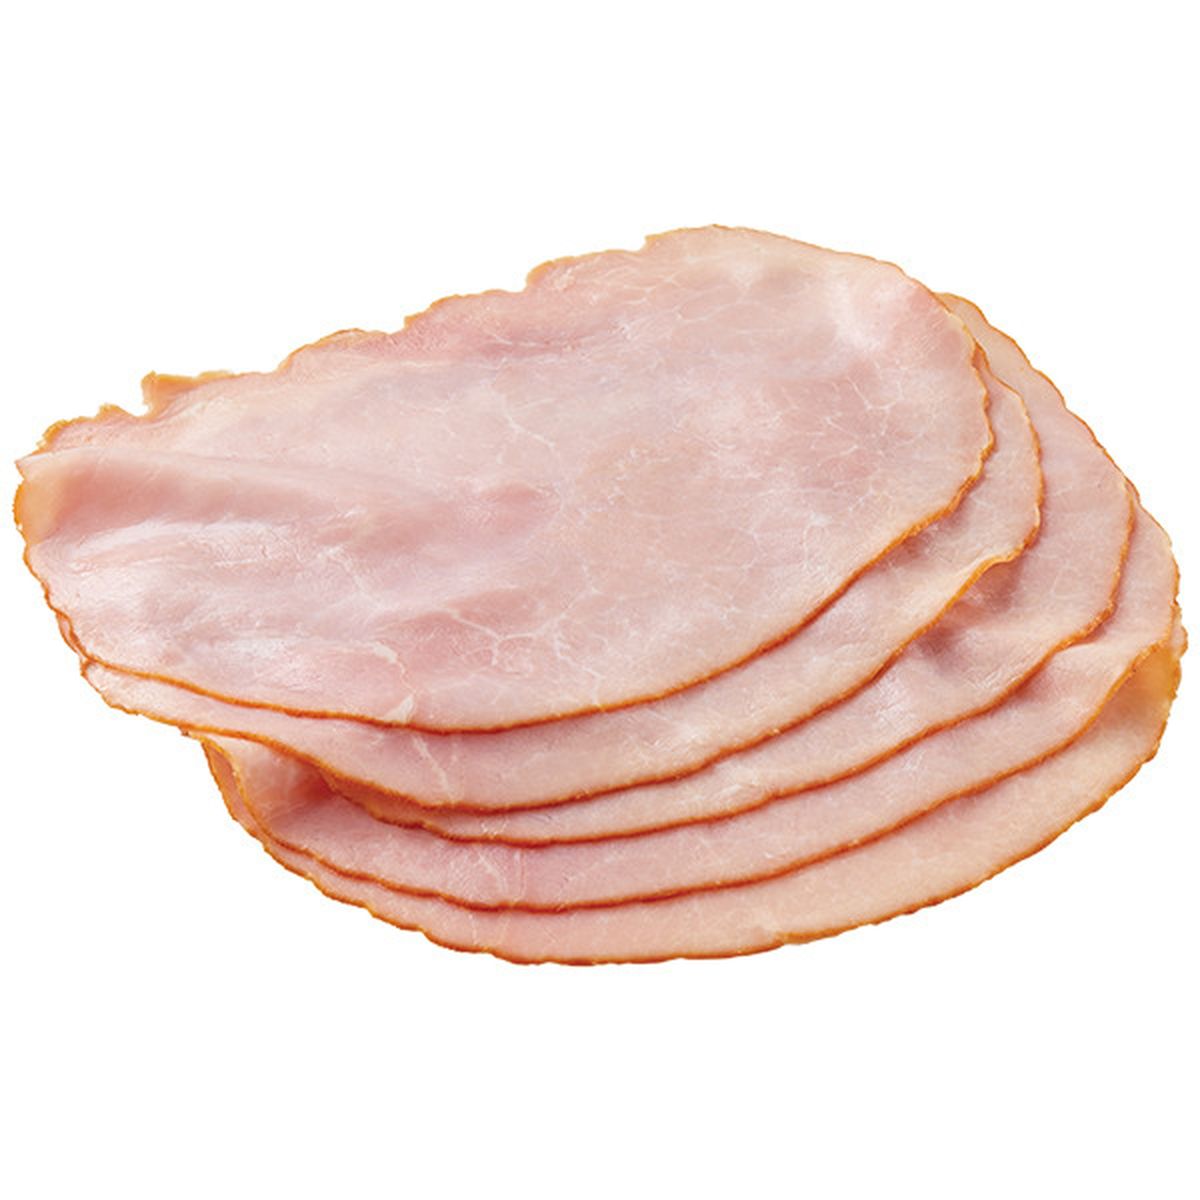 Calories in Wegmans Thin Sliced Ham off the Bone